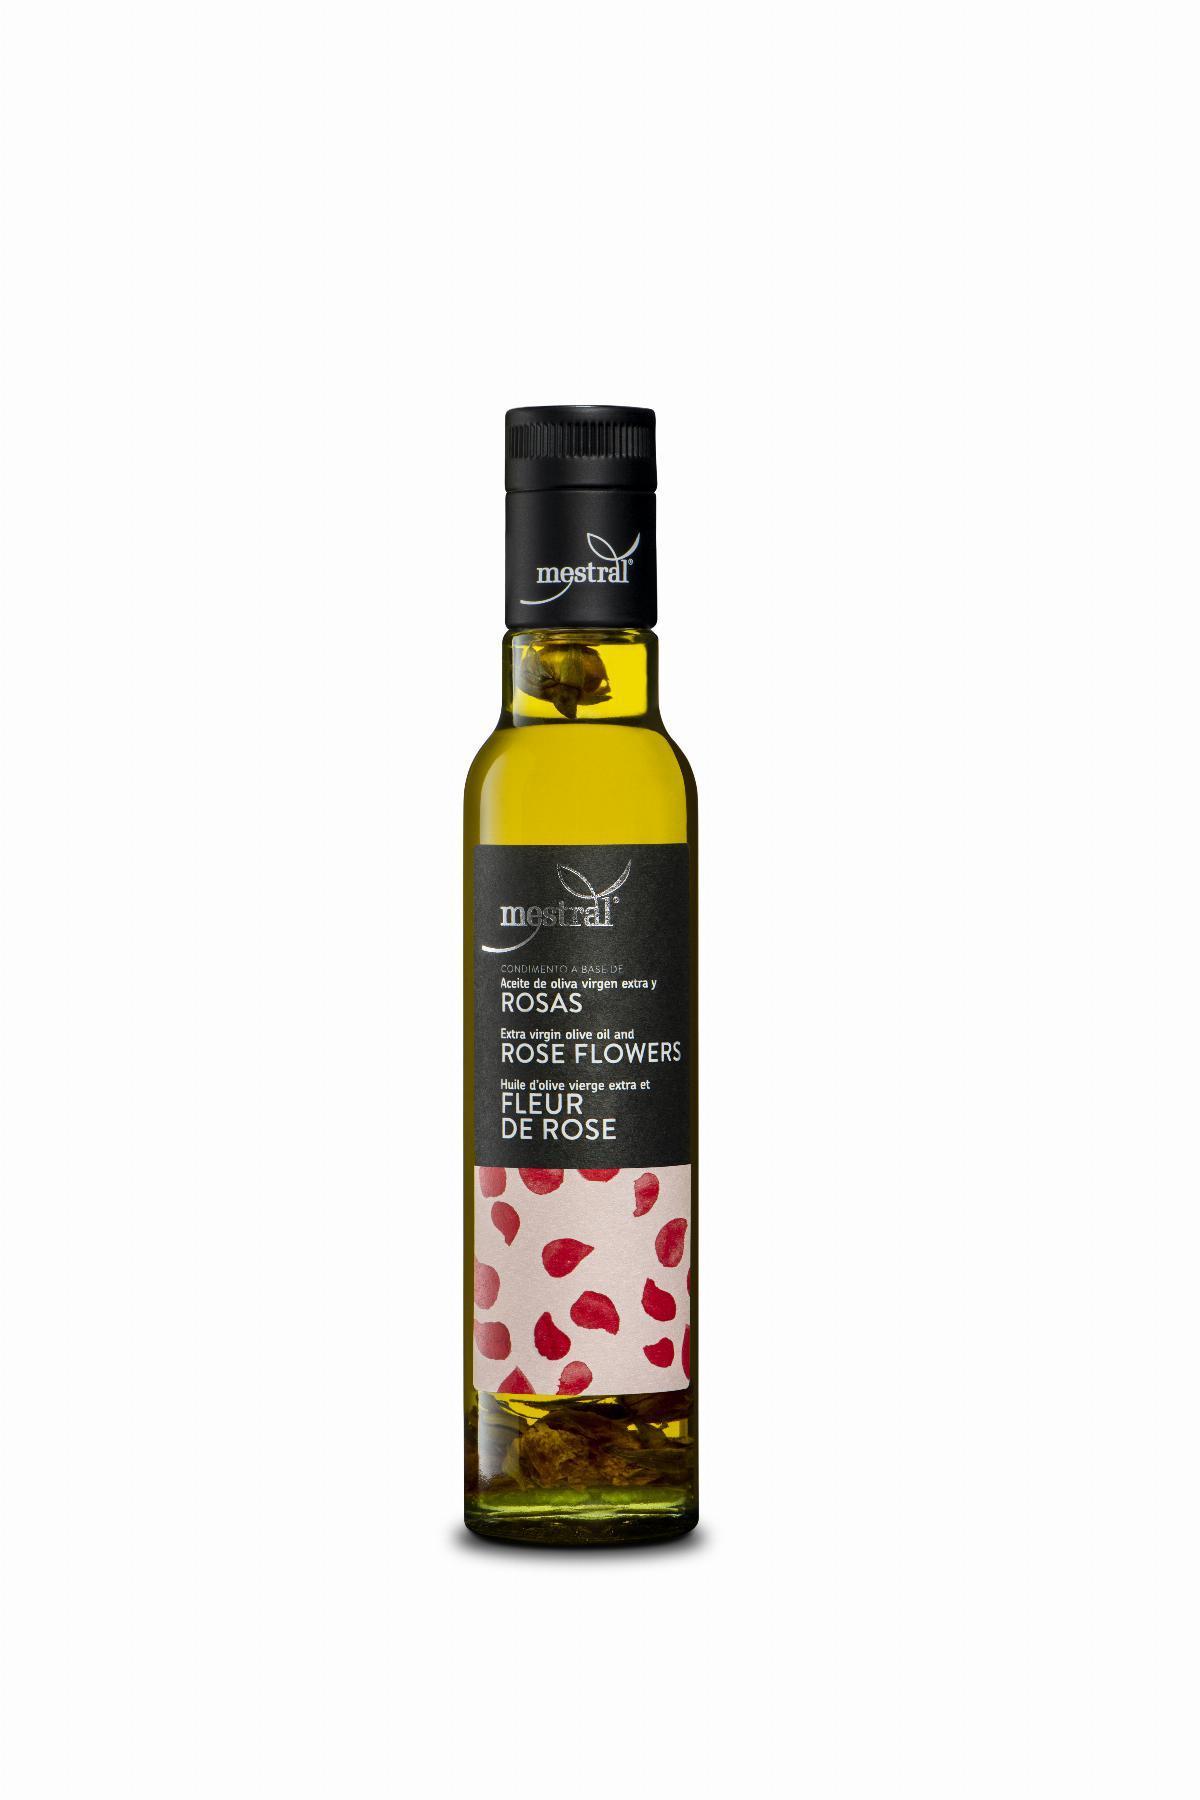 Huile d'olive et Condiments - Oli d'Oliva Verge Extra Mestral amb Roses, ampolla Dòrica transparent, 250ml, ES-EN-FR - Mestral Cambrils